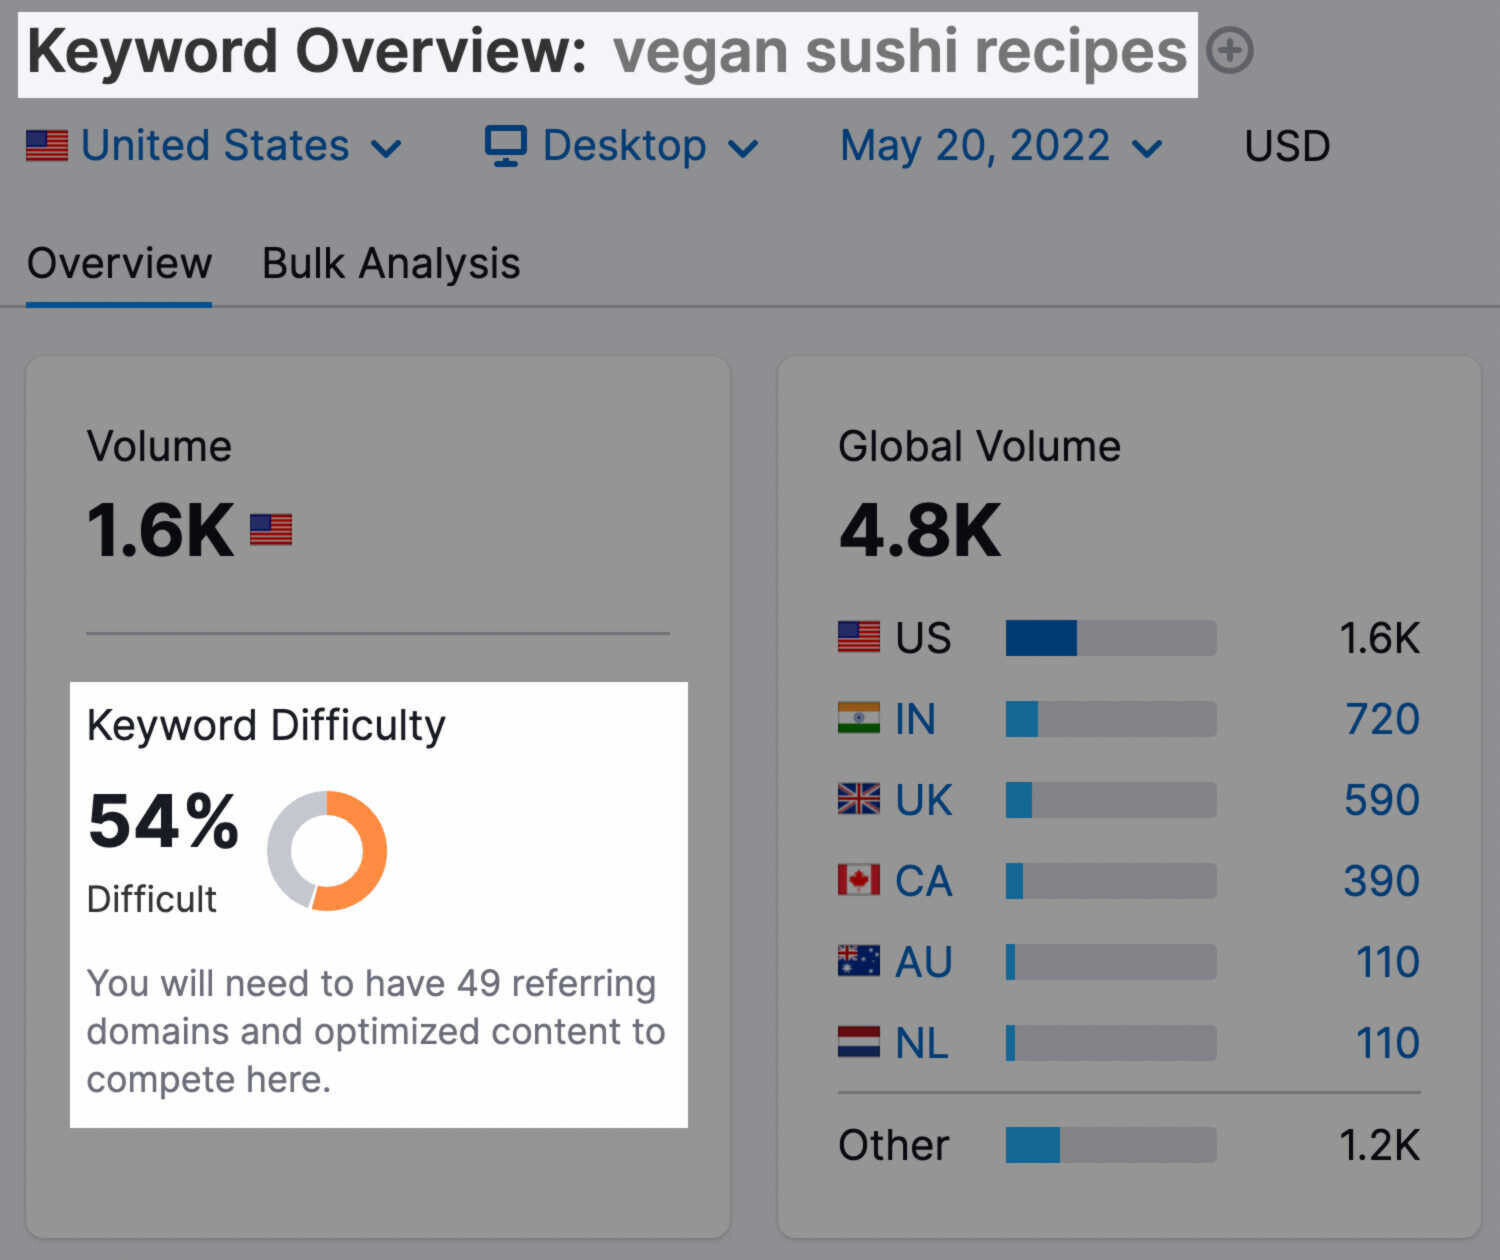 Keyword Overview for "vegan sushi recipes"